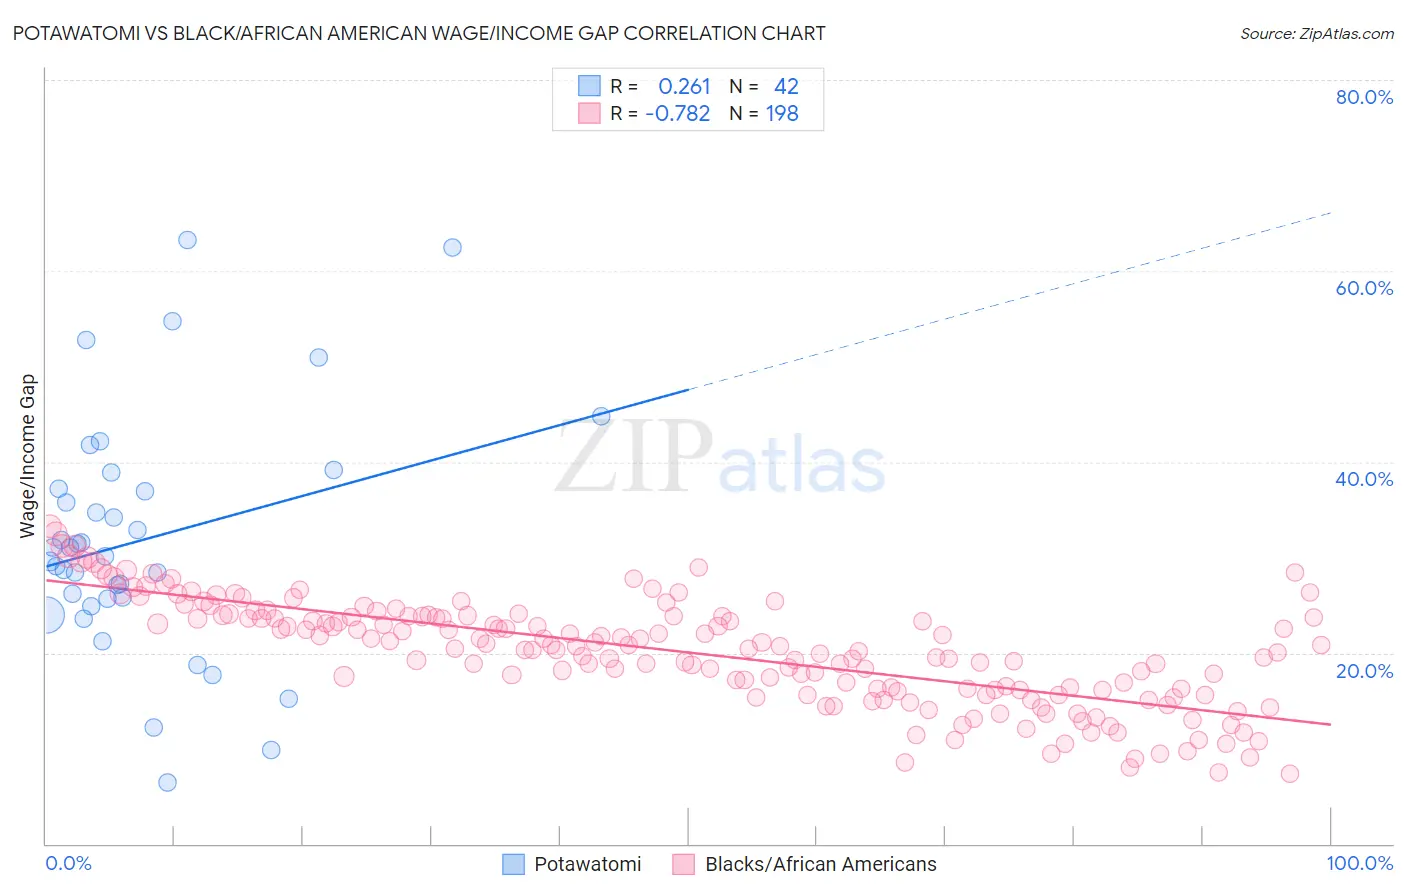 Potawatomi vs Black/African American Wage/Income Gap